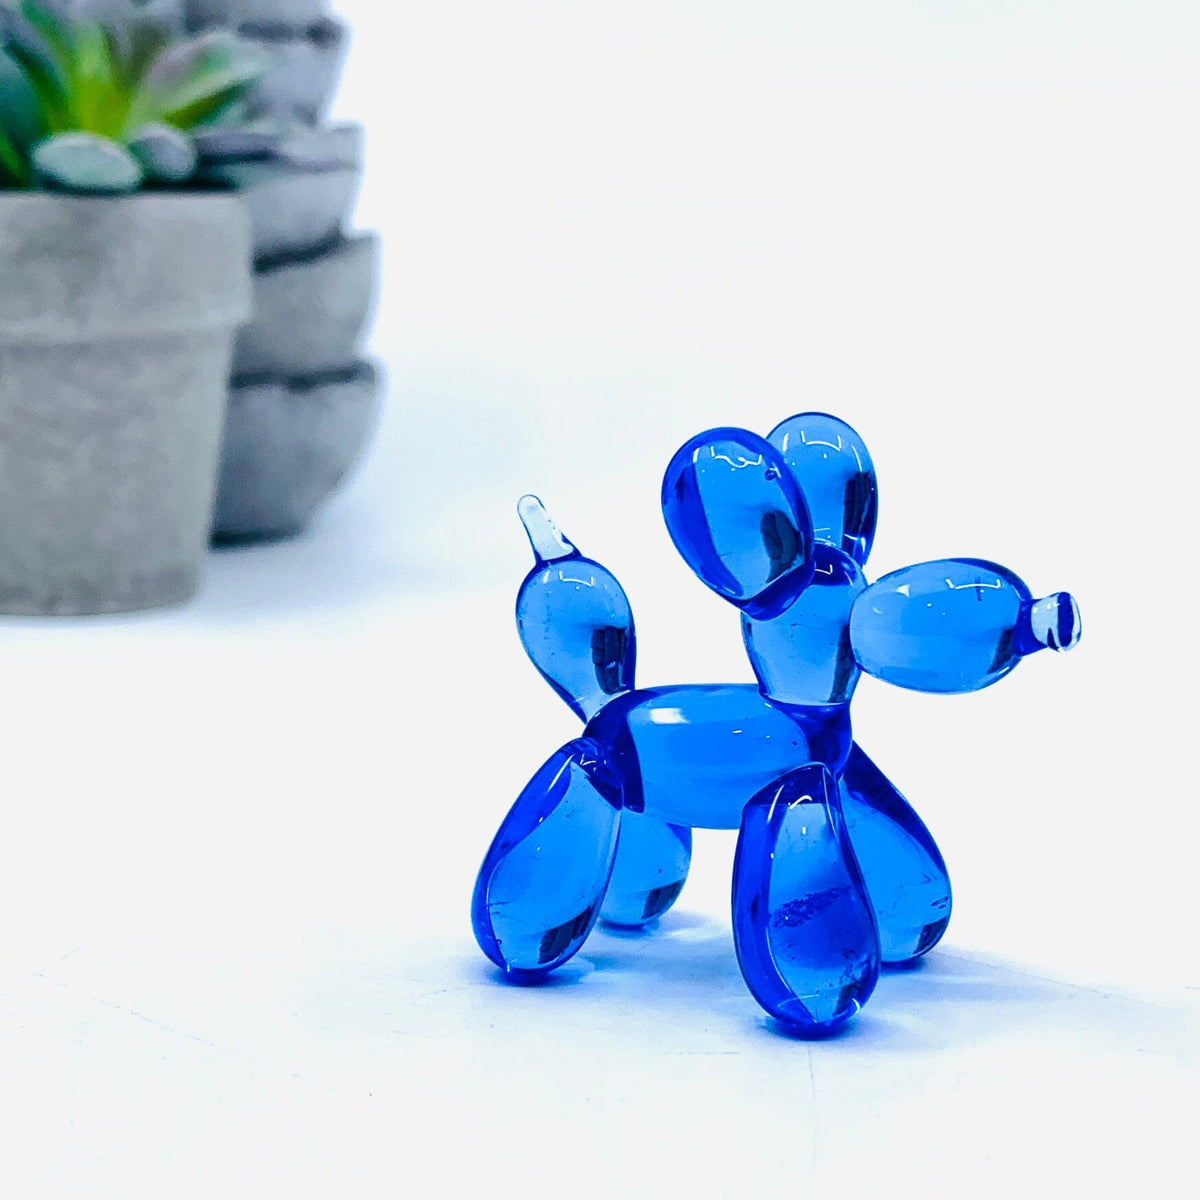 Balloon Dog Figurines Miniature - Blue 